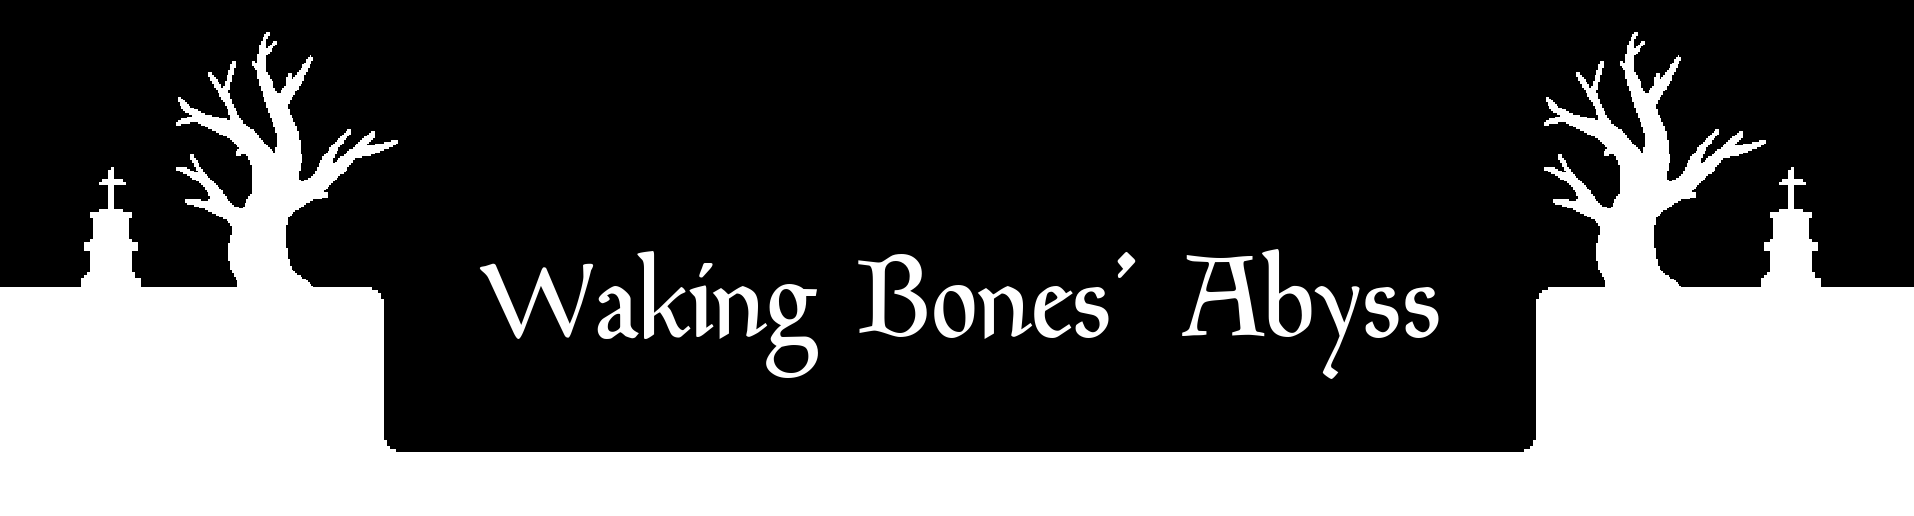 Waking Bones' Abyss